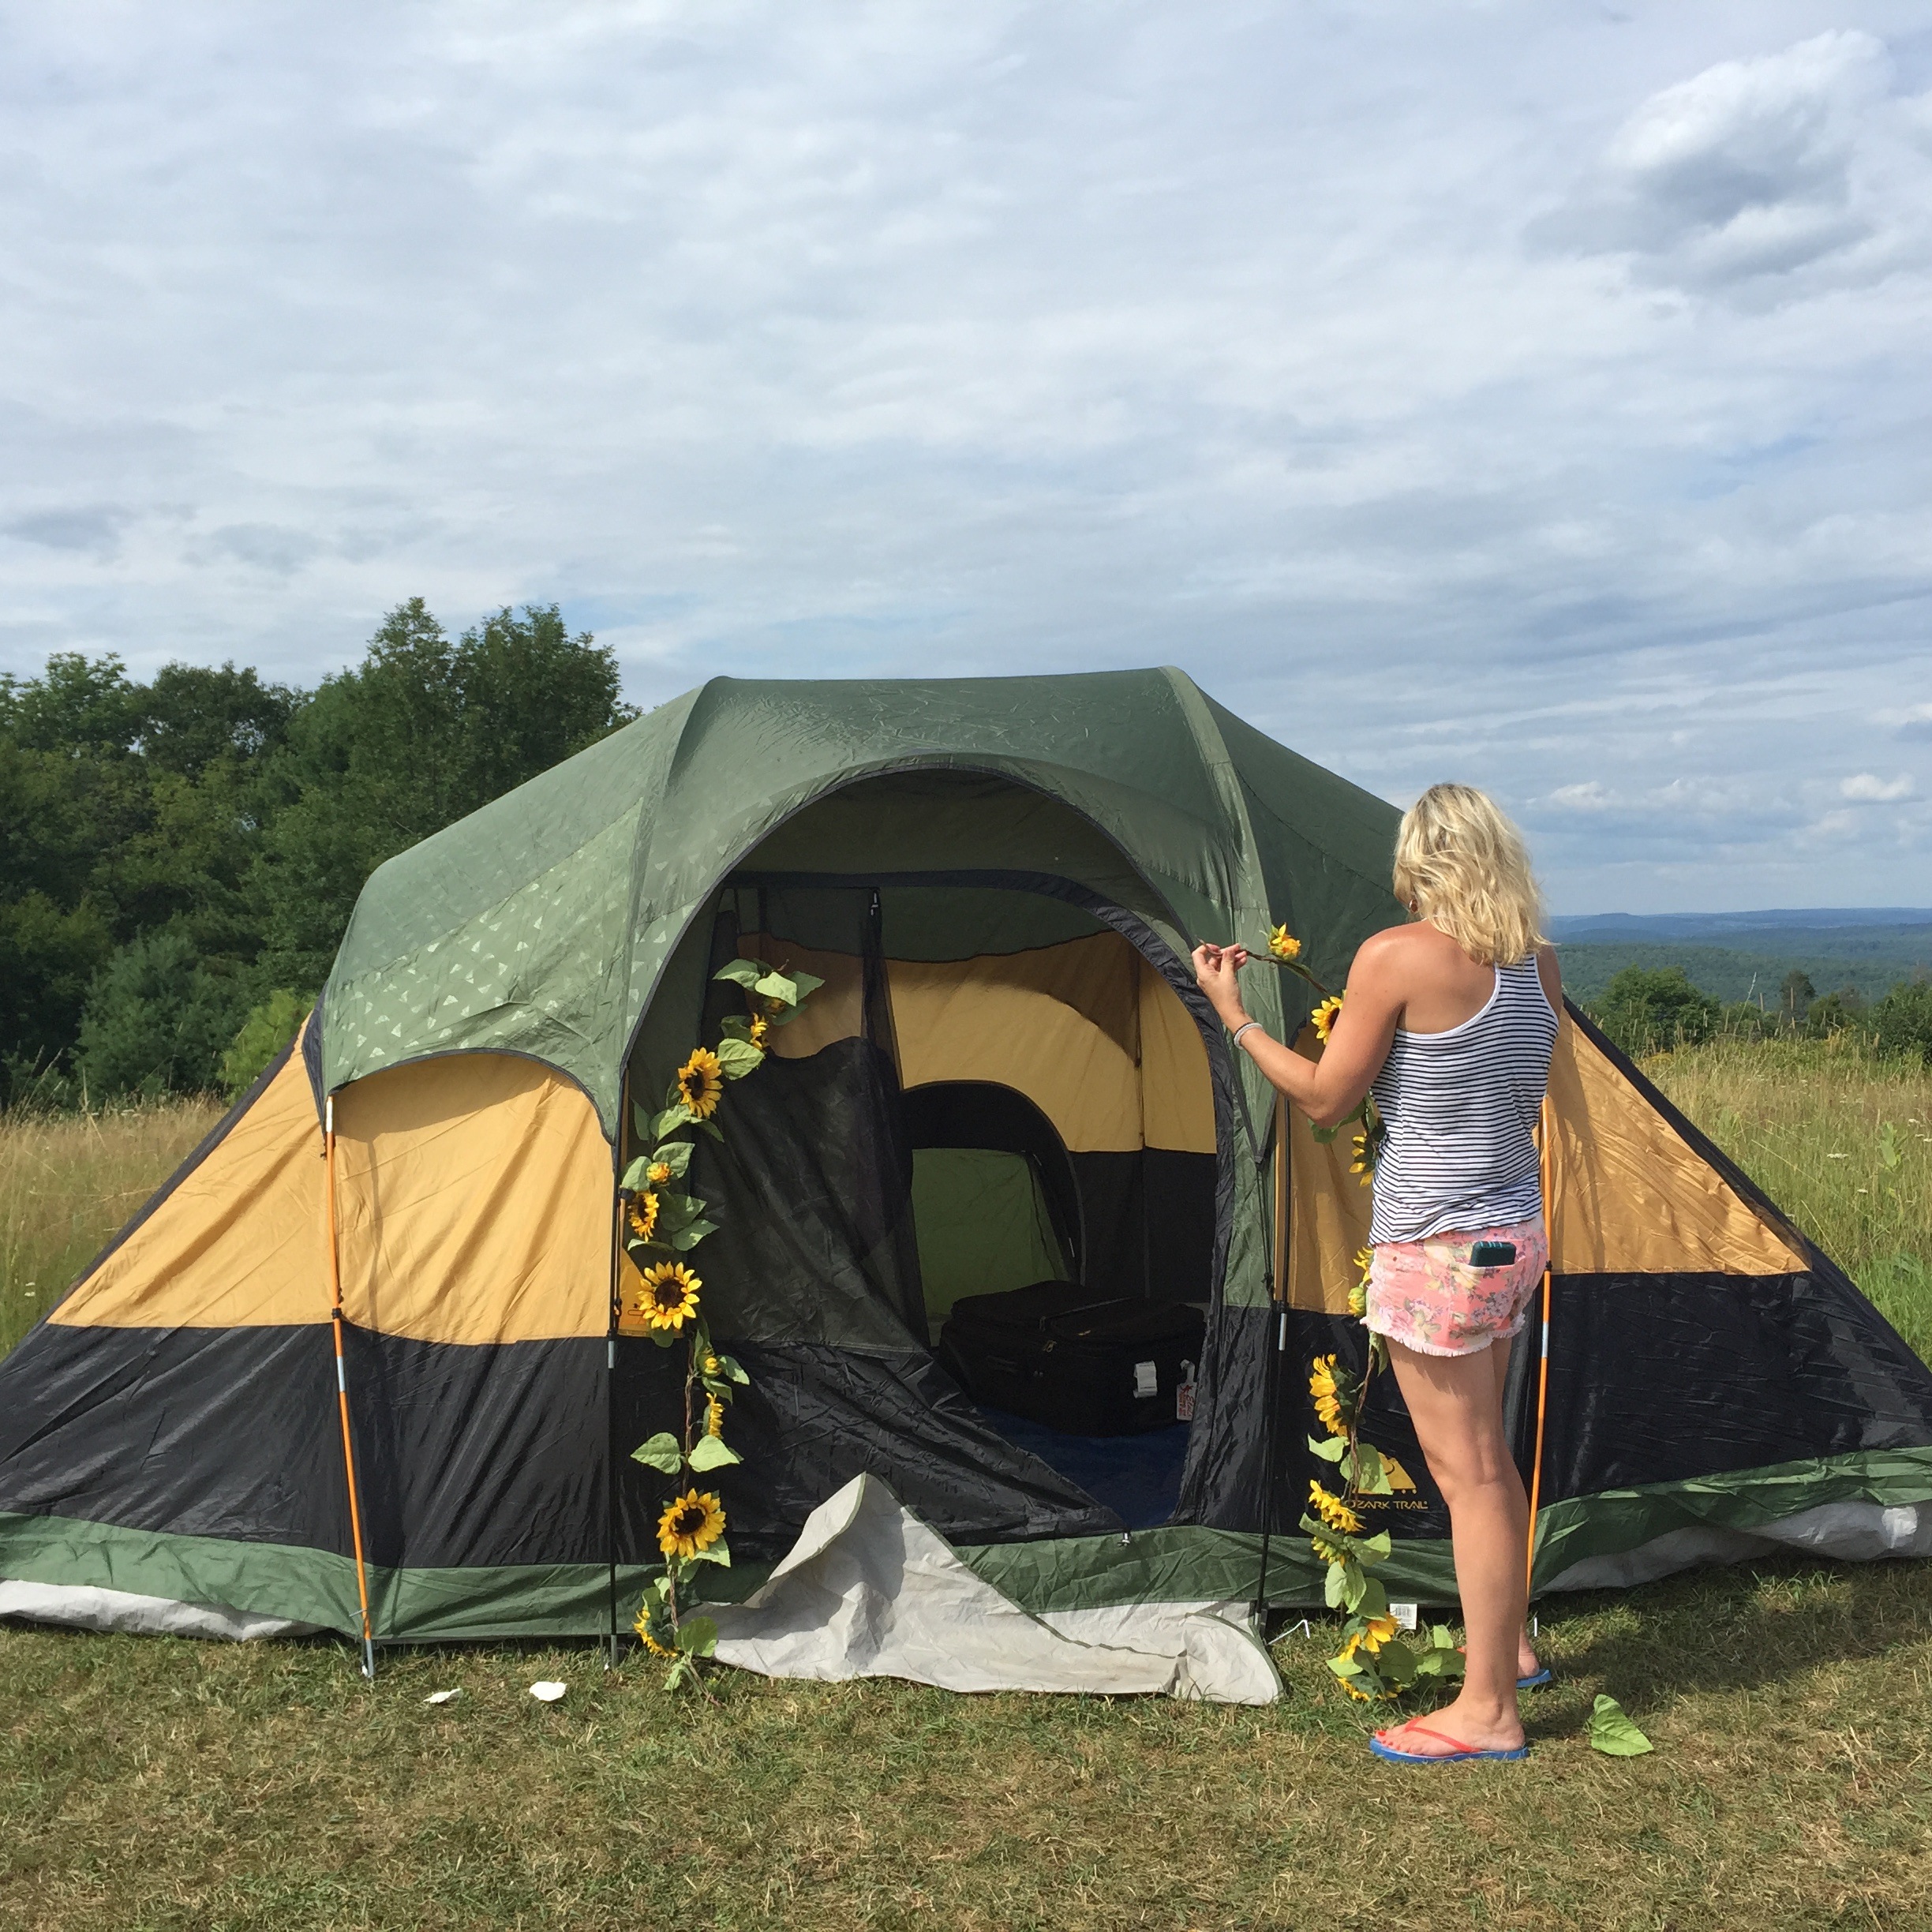 MILANVILLE Camping, 2015, digital photo